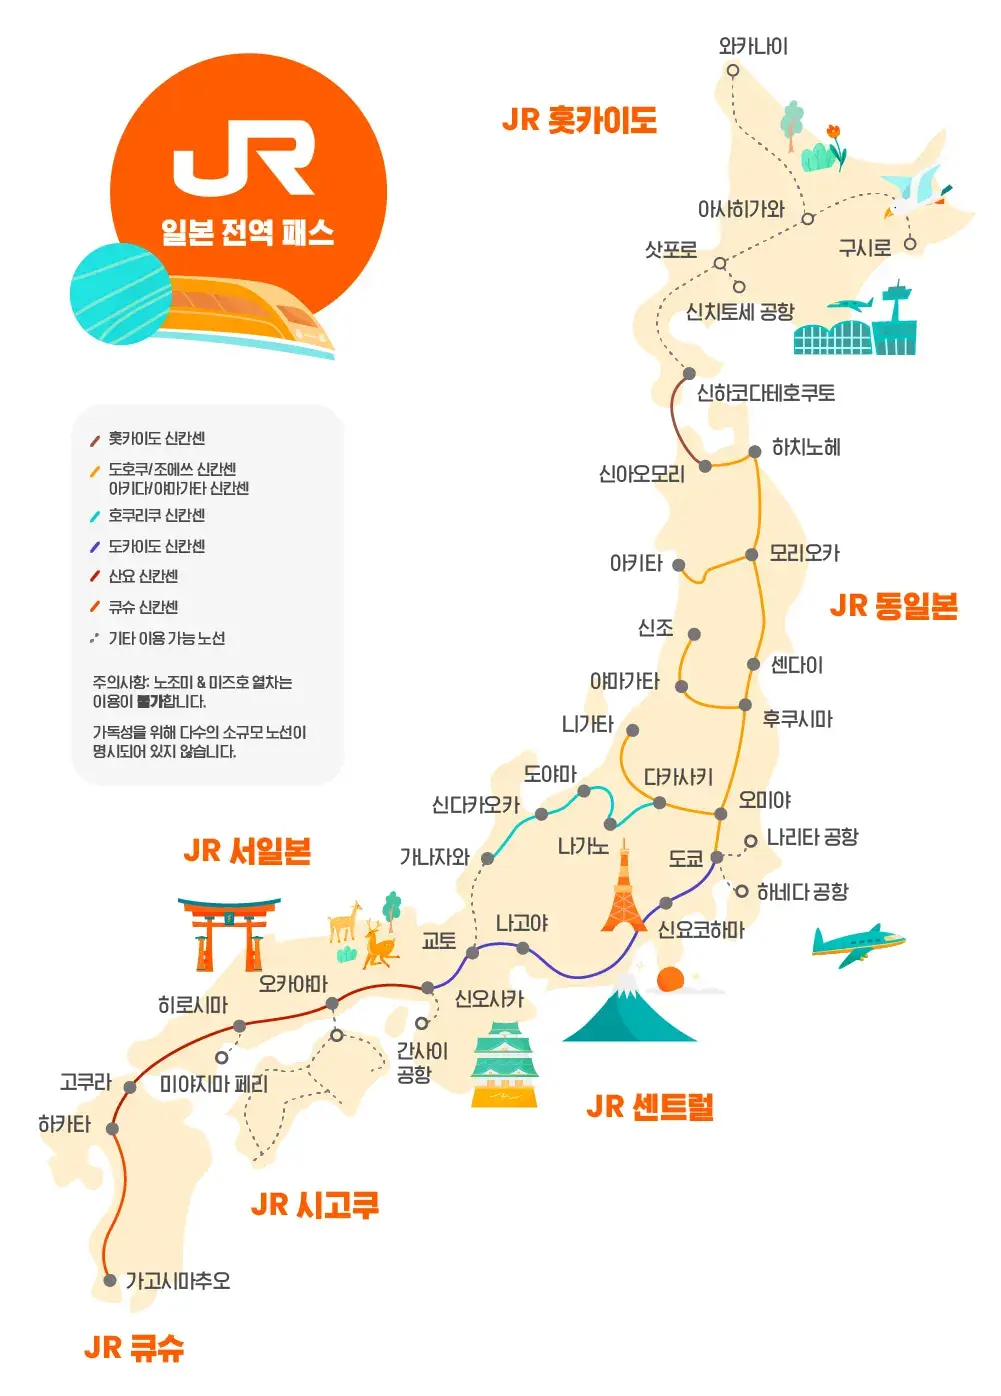 JR노선으로 갈 수 있는 일본지역 지도이미지입니다.